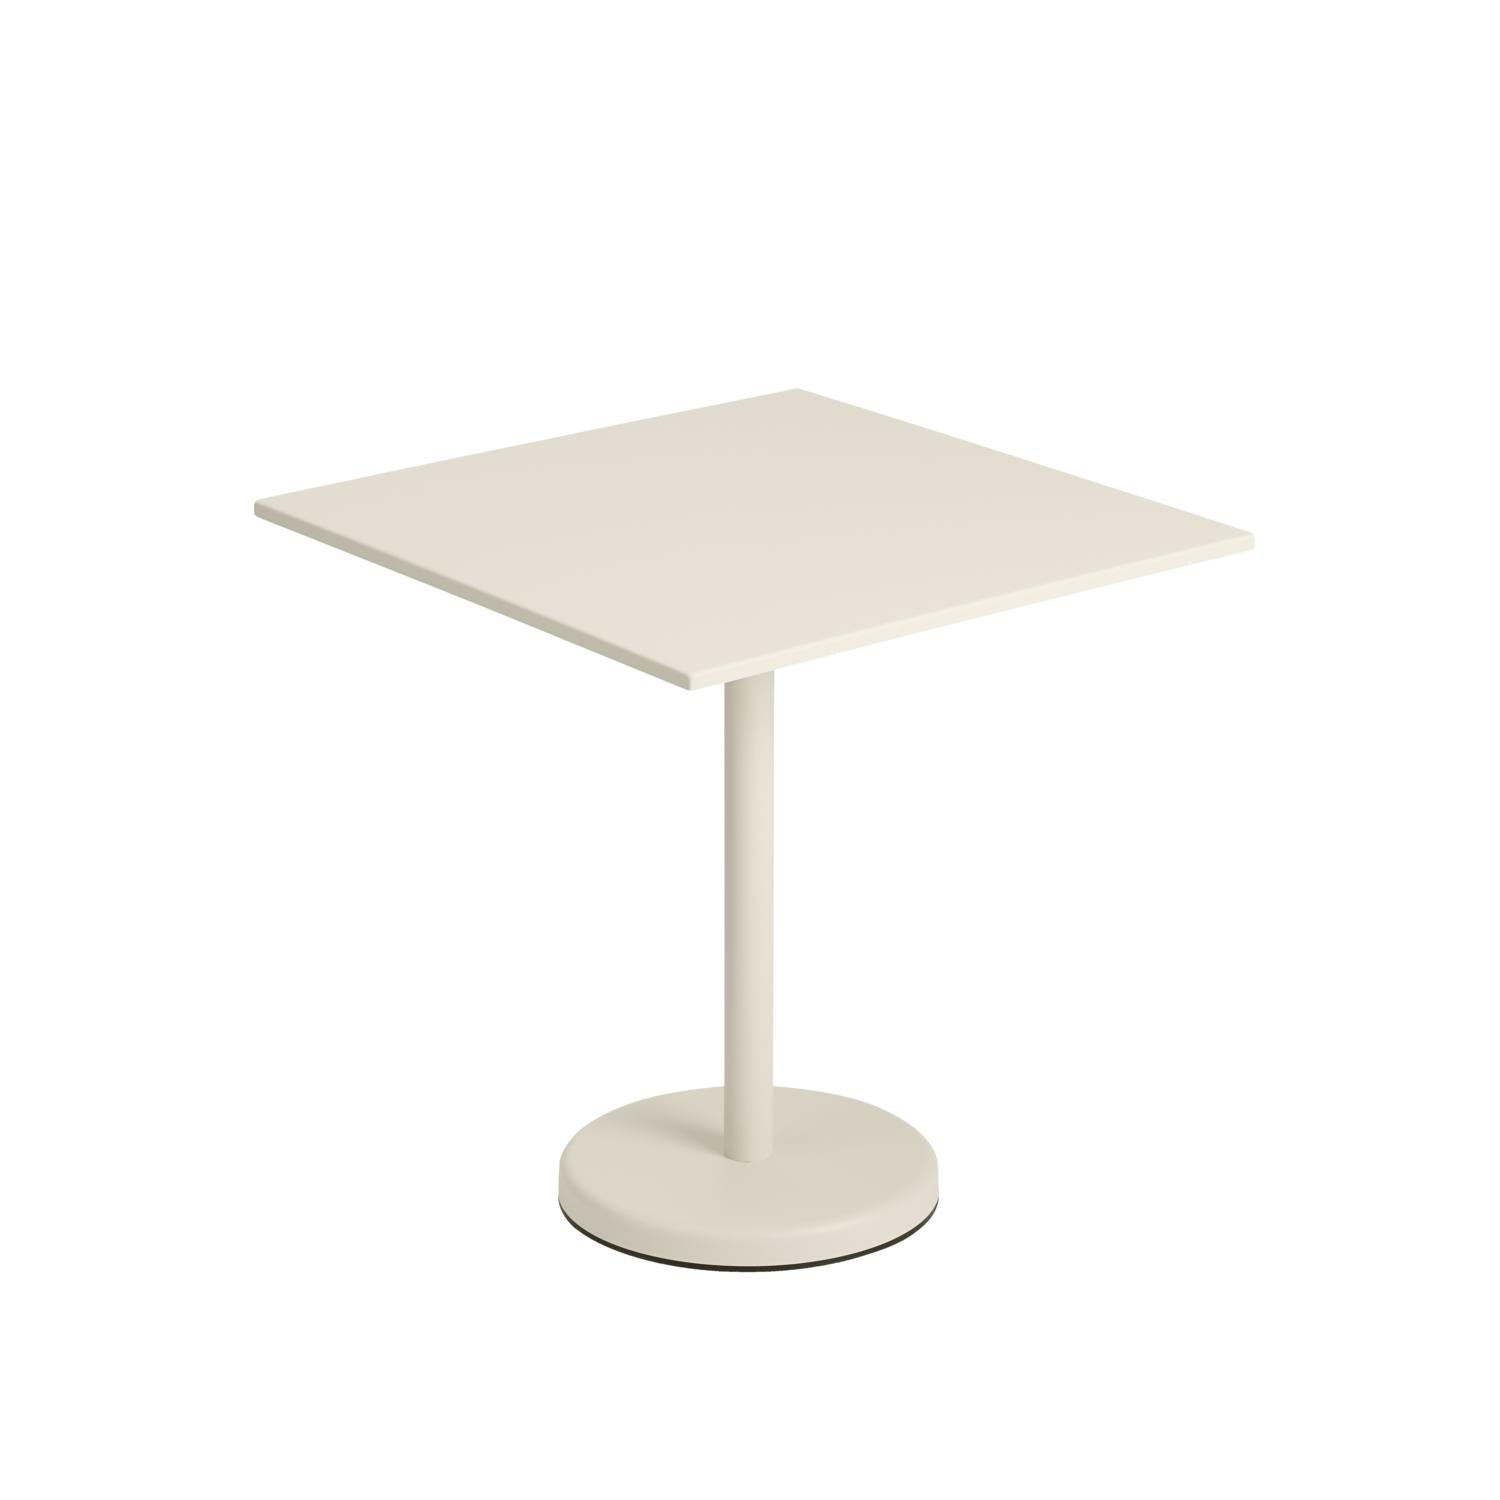 Muuto Linear Stahl Café Tabelle 70 x70 cm, aus weiß